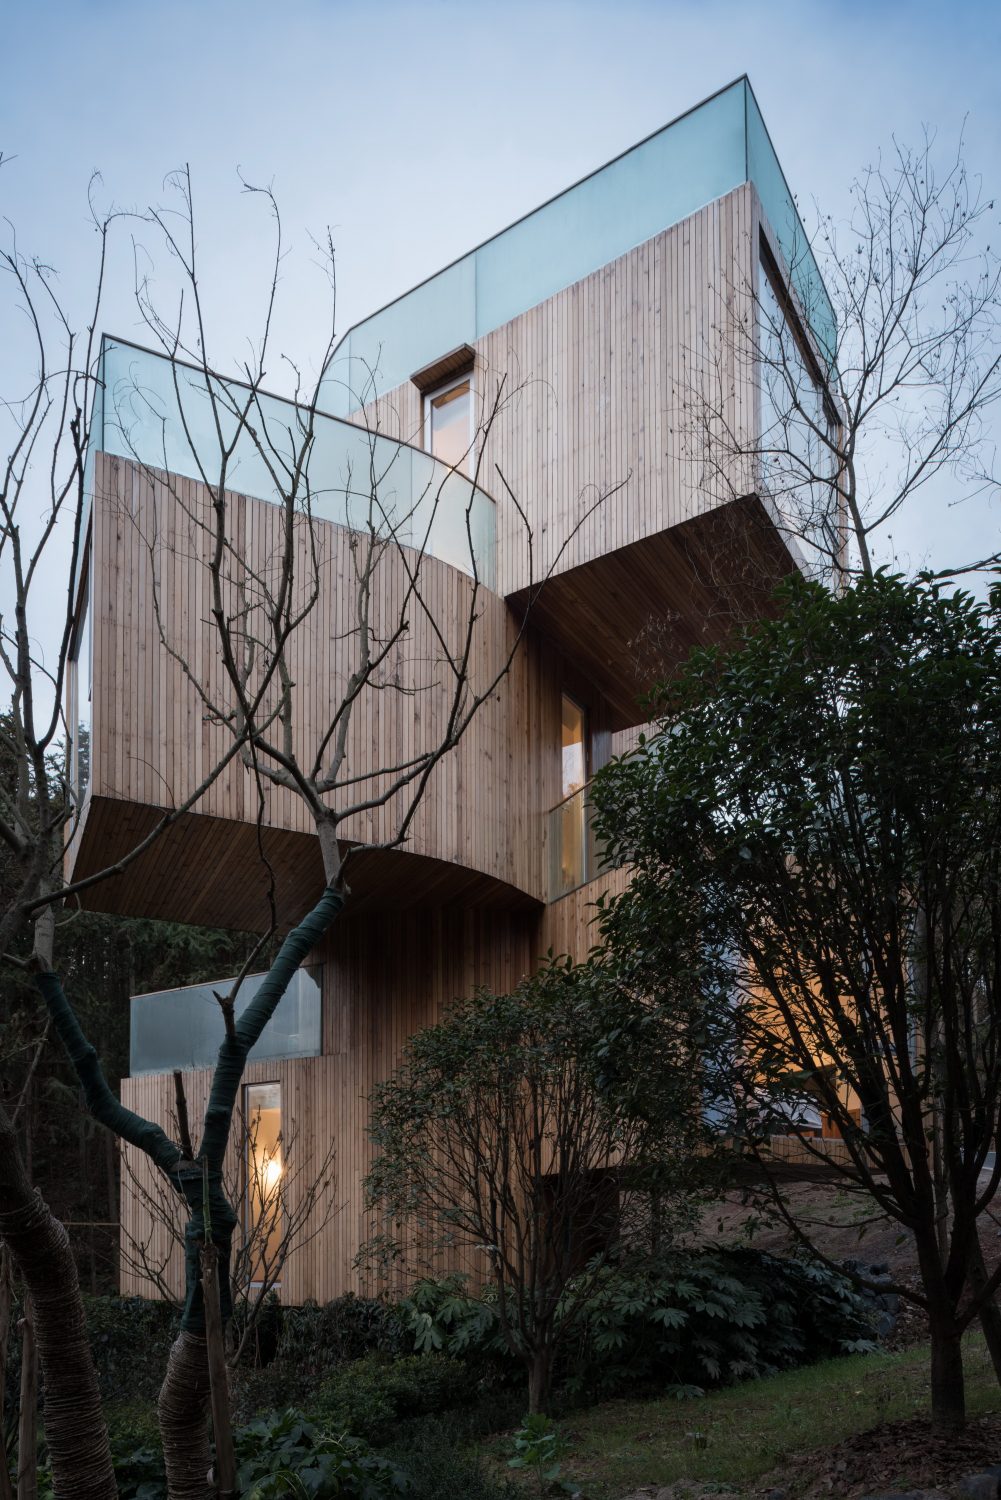 The Qiyun Mountain Tree House by Bengo Studio